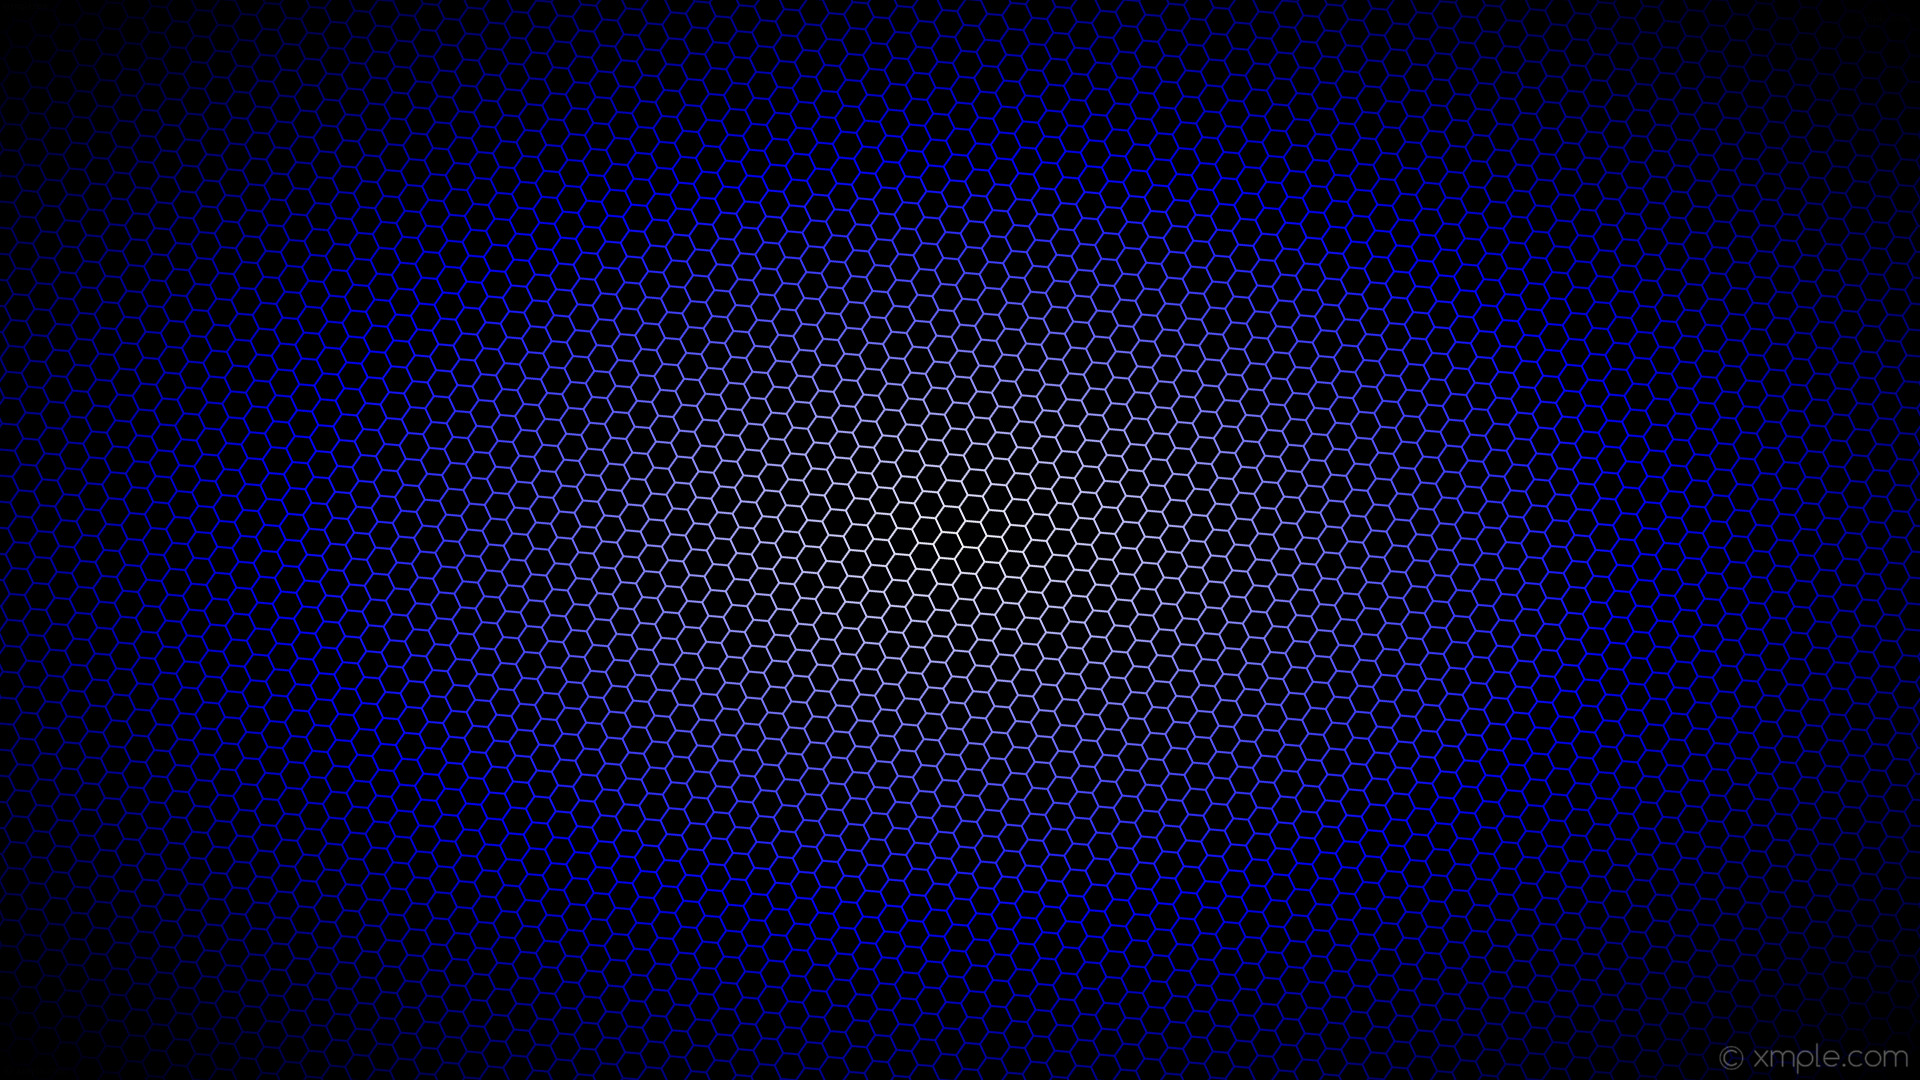 1920x1080 wallpaper blue hexagon glow white gradient black #000000 #ffffff #0000ff  diagonal 25Â°